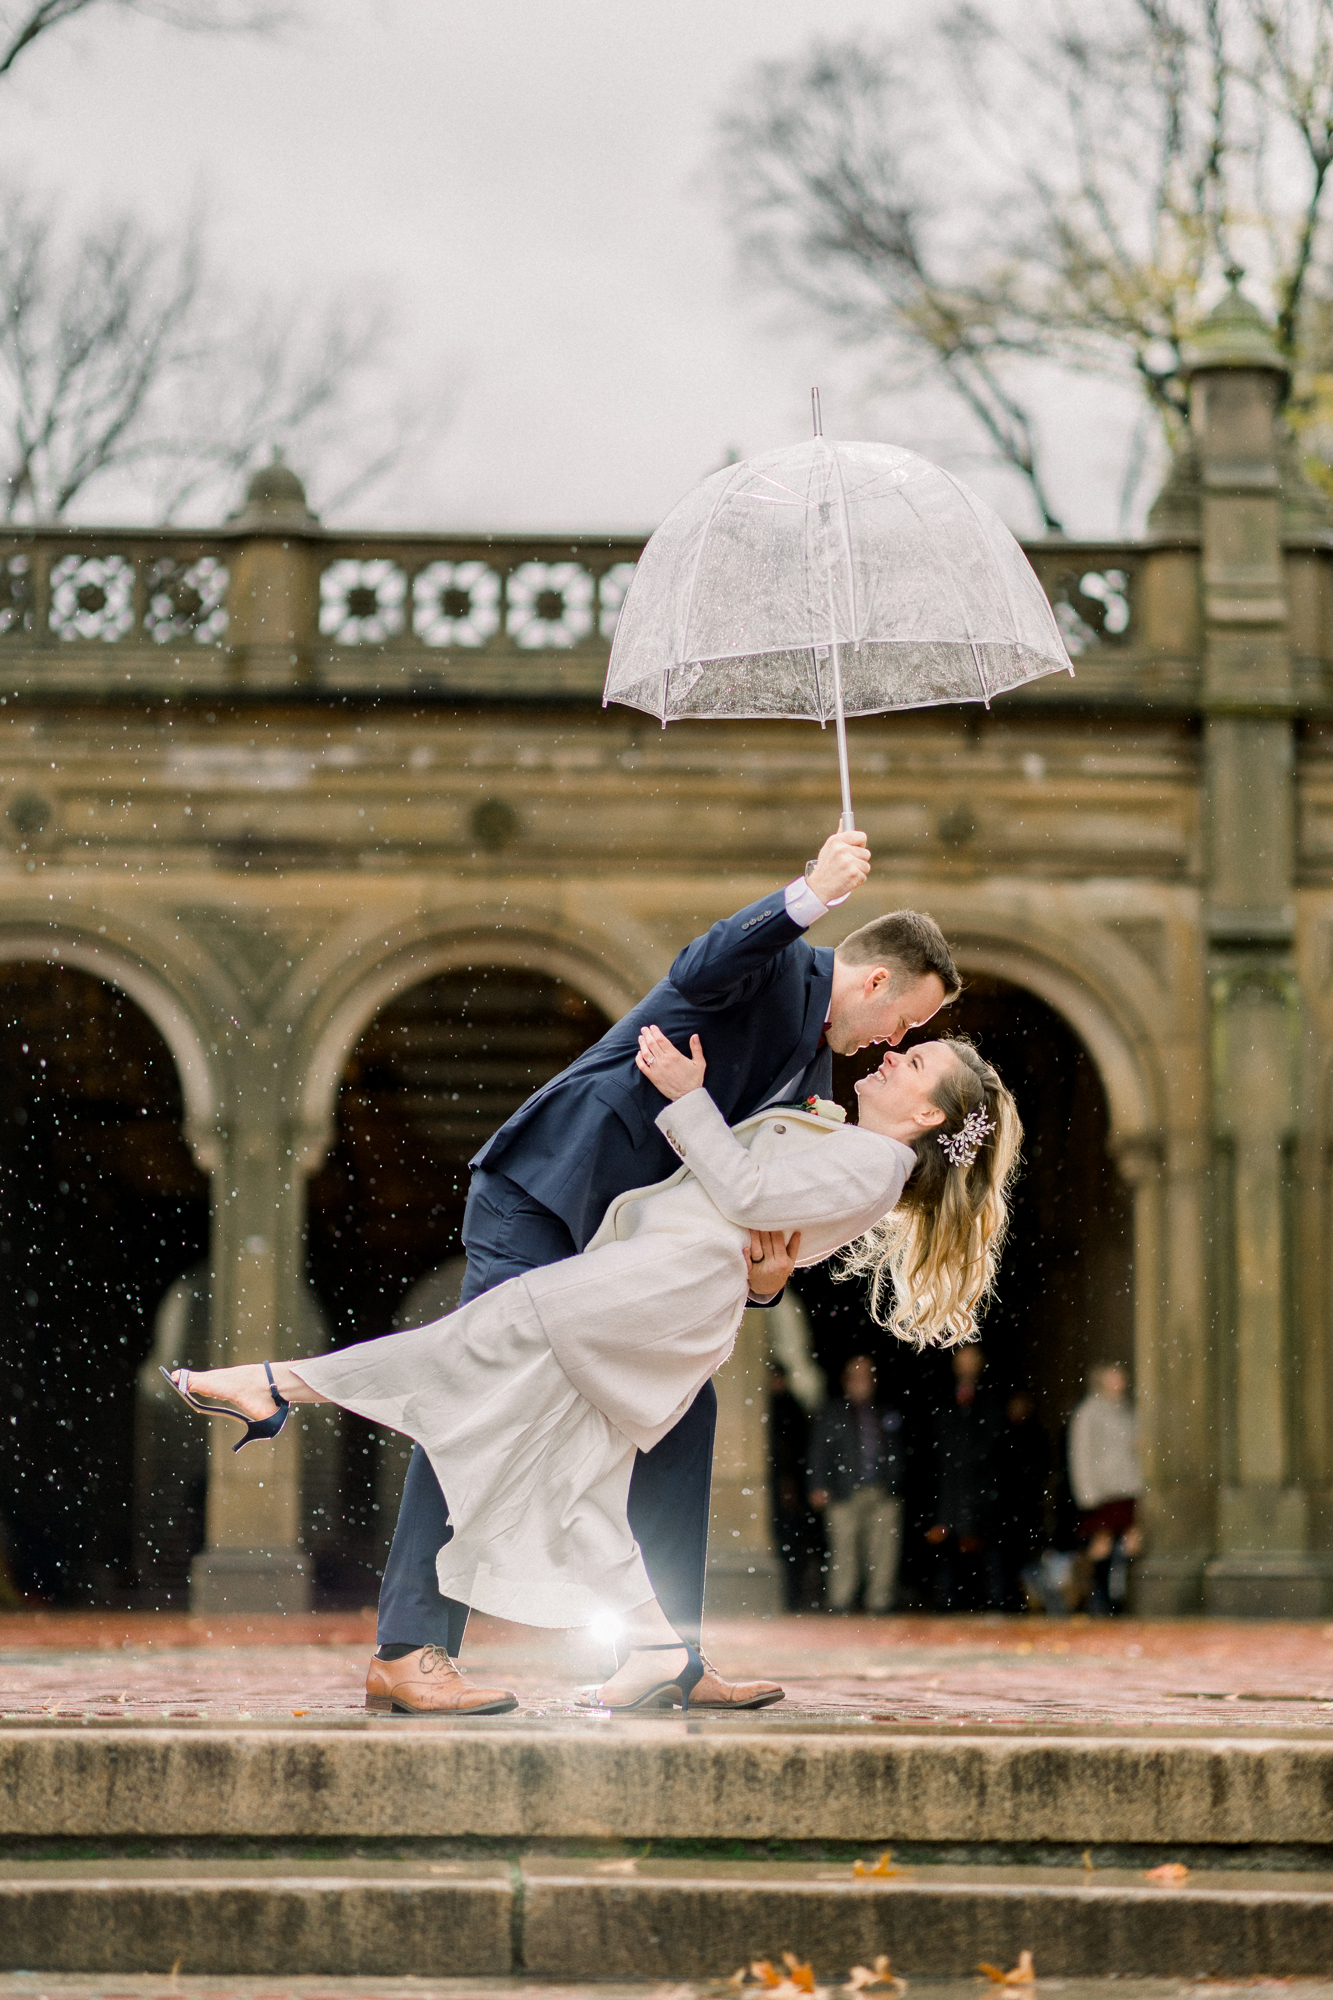 Bethesda Terrace rainy day wedding photos in New York City